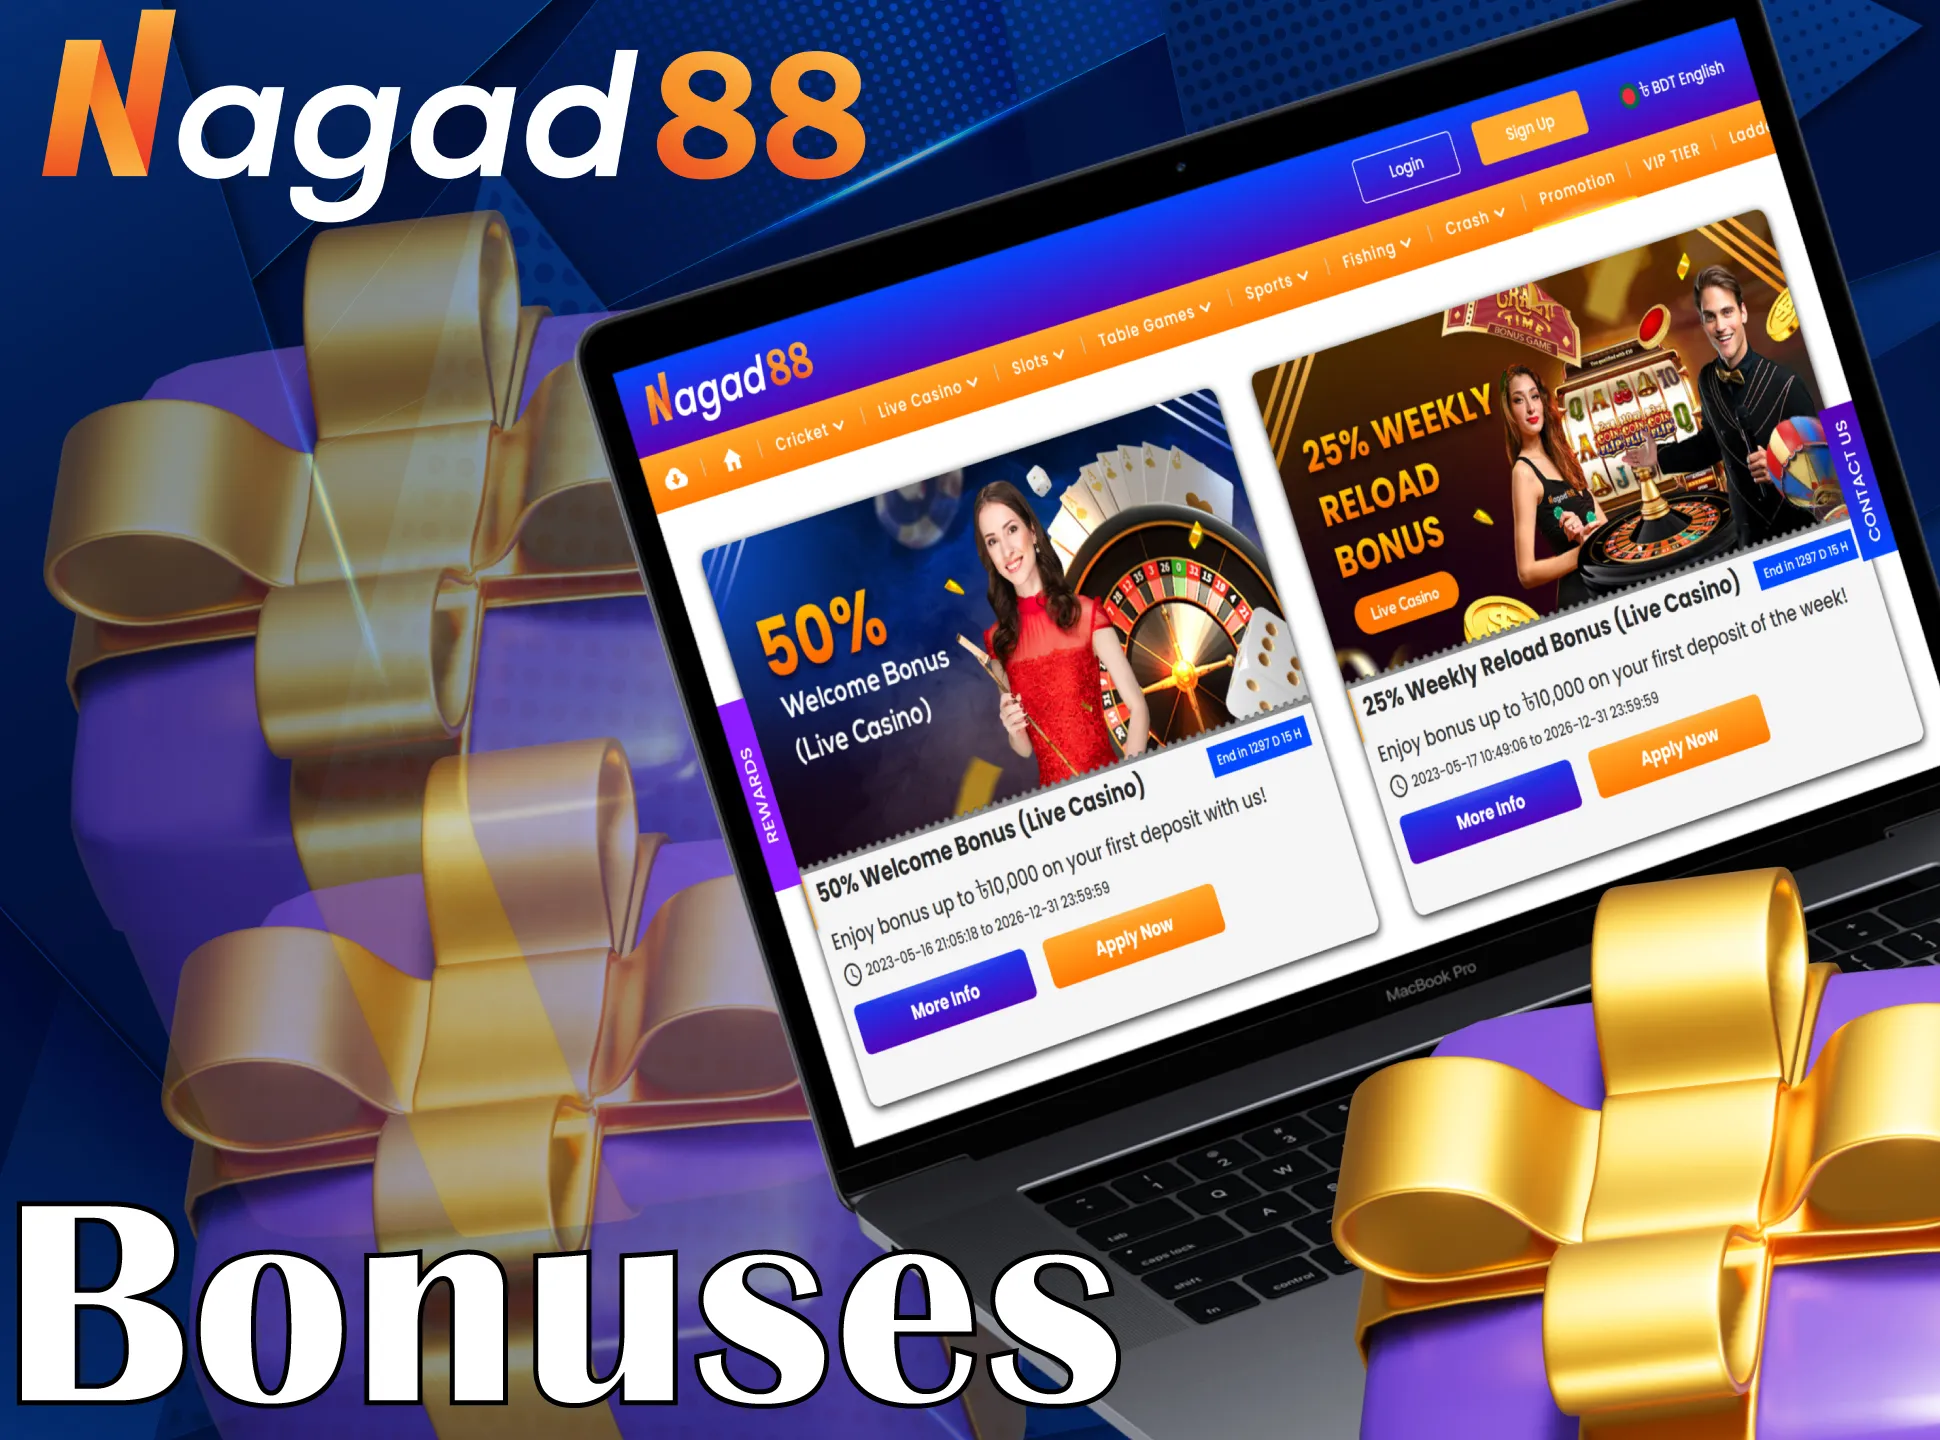 Nagad88 has many bonuses for players.